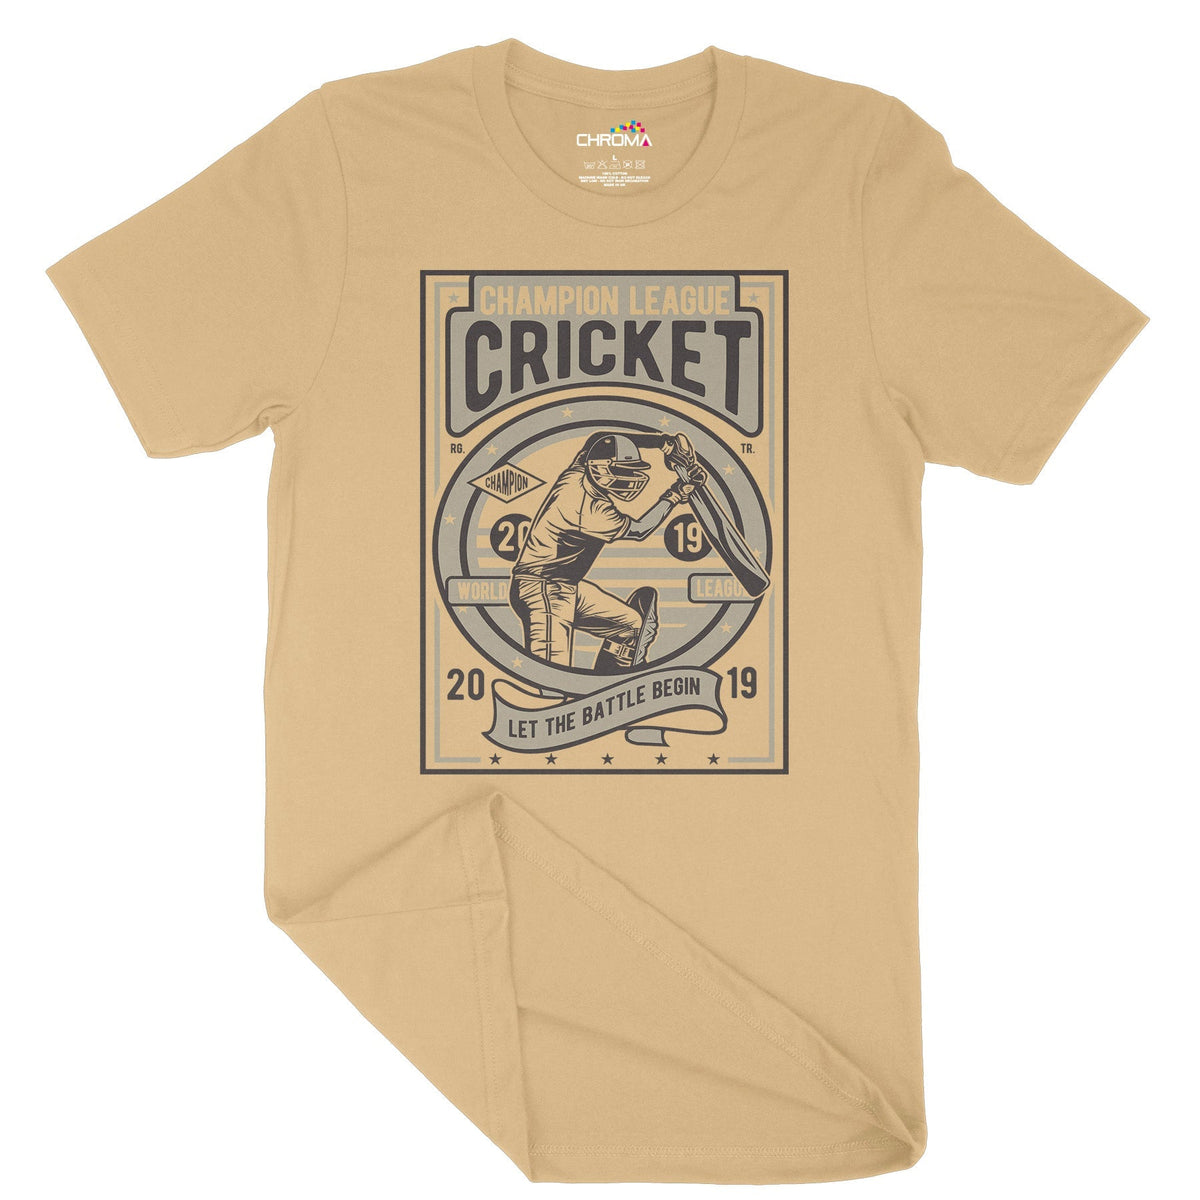 Champion League Cricket | Vintage Adult T-Shirt | Classic Vintage Clot Chroma Clothing